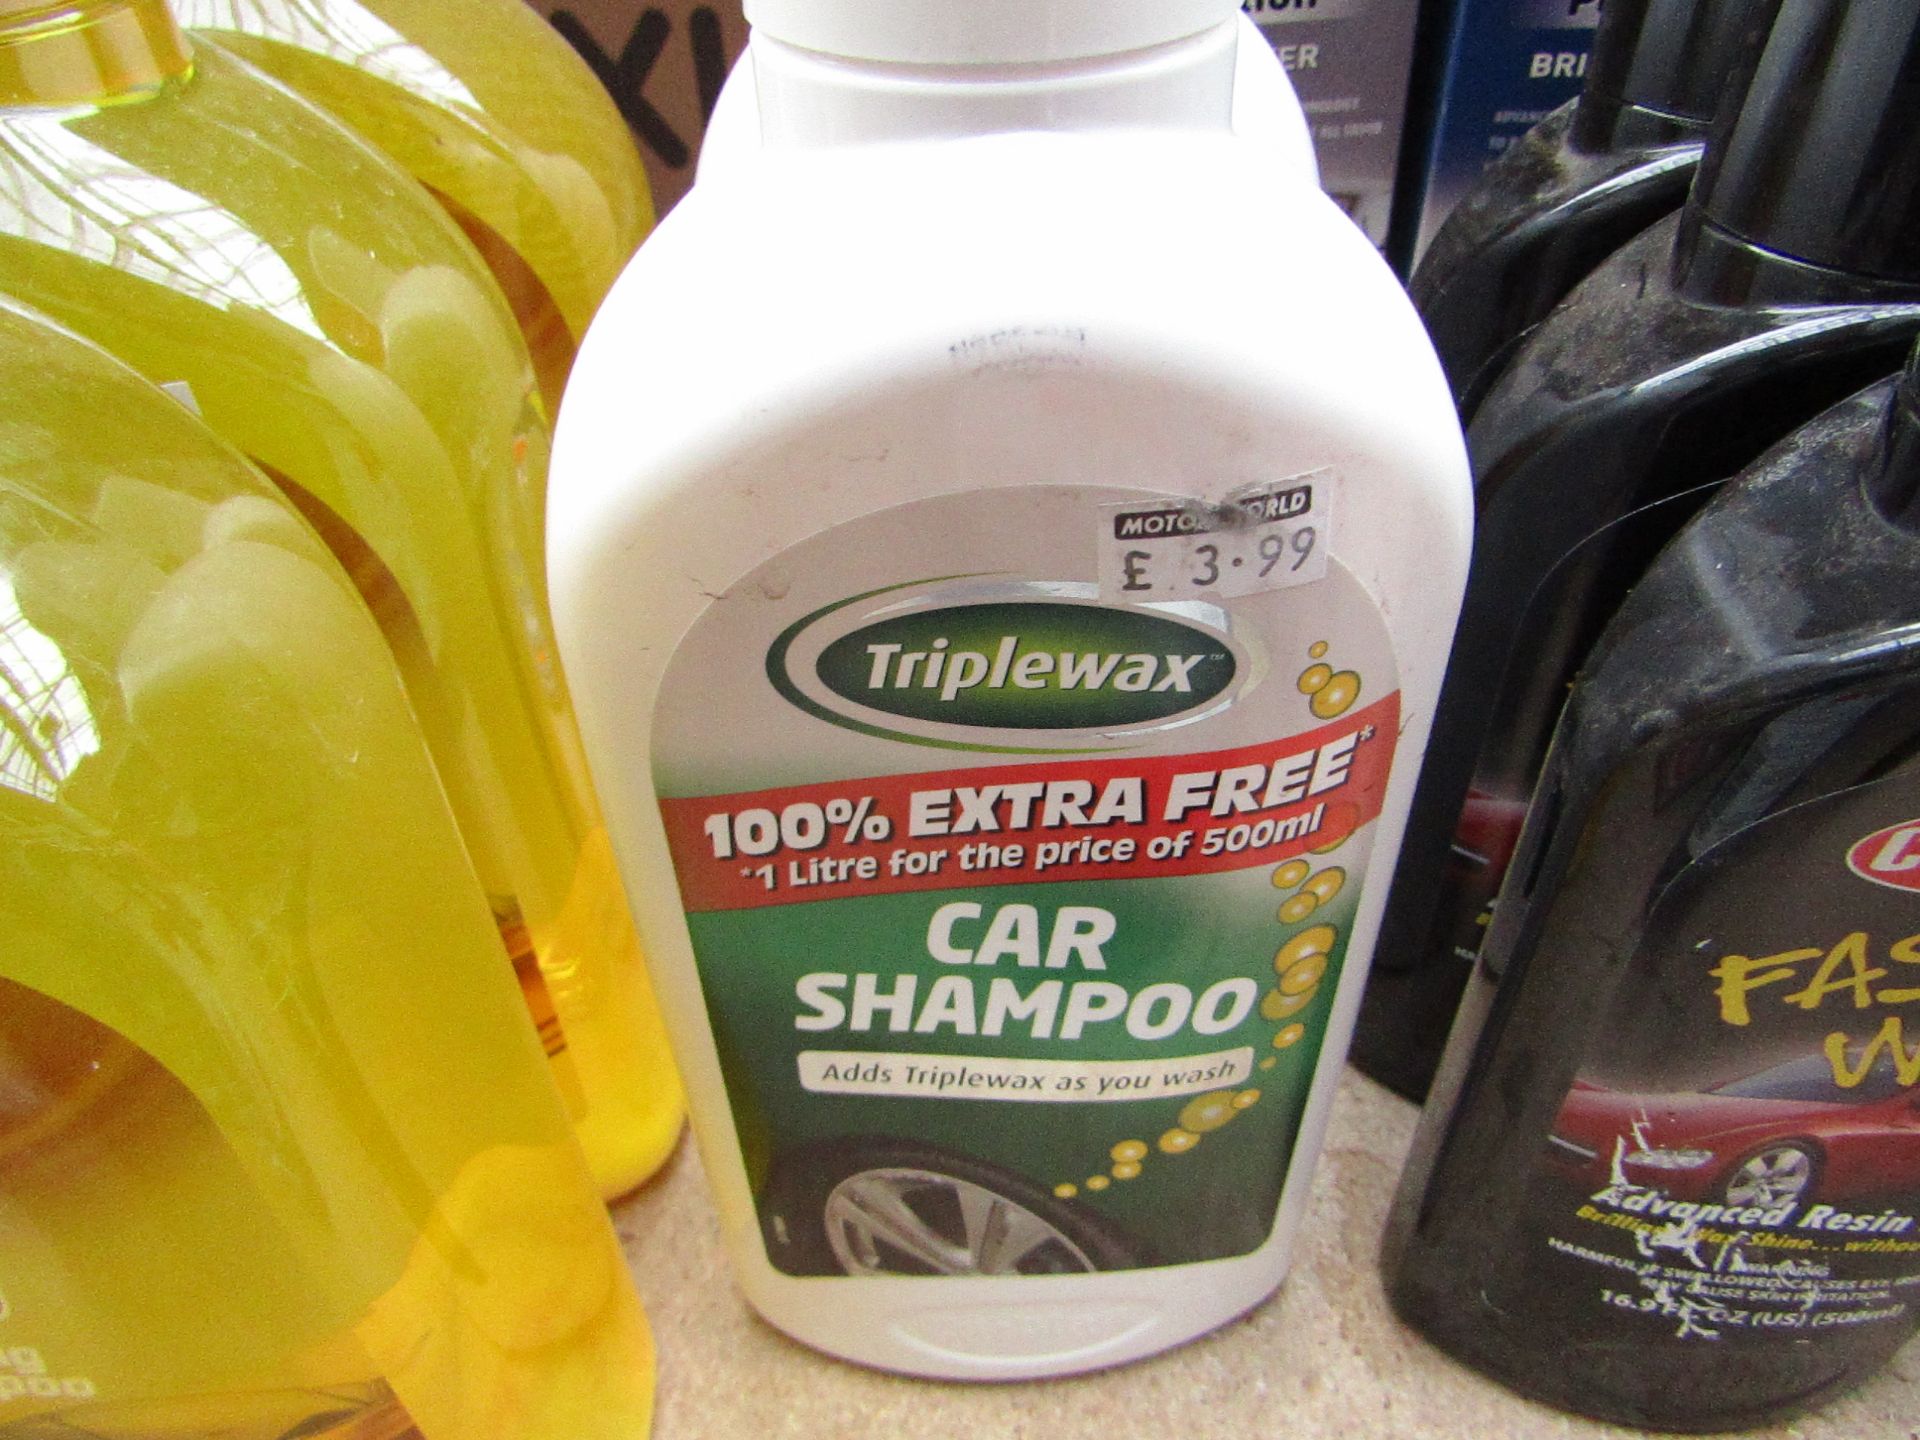 2x Triplewax - Car Shampoo - Good Condition.